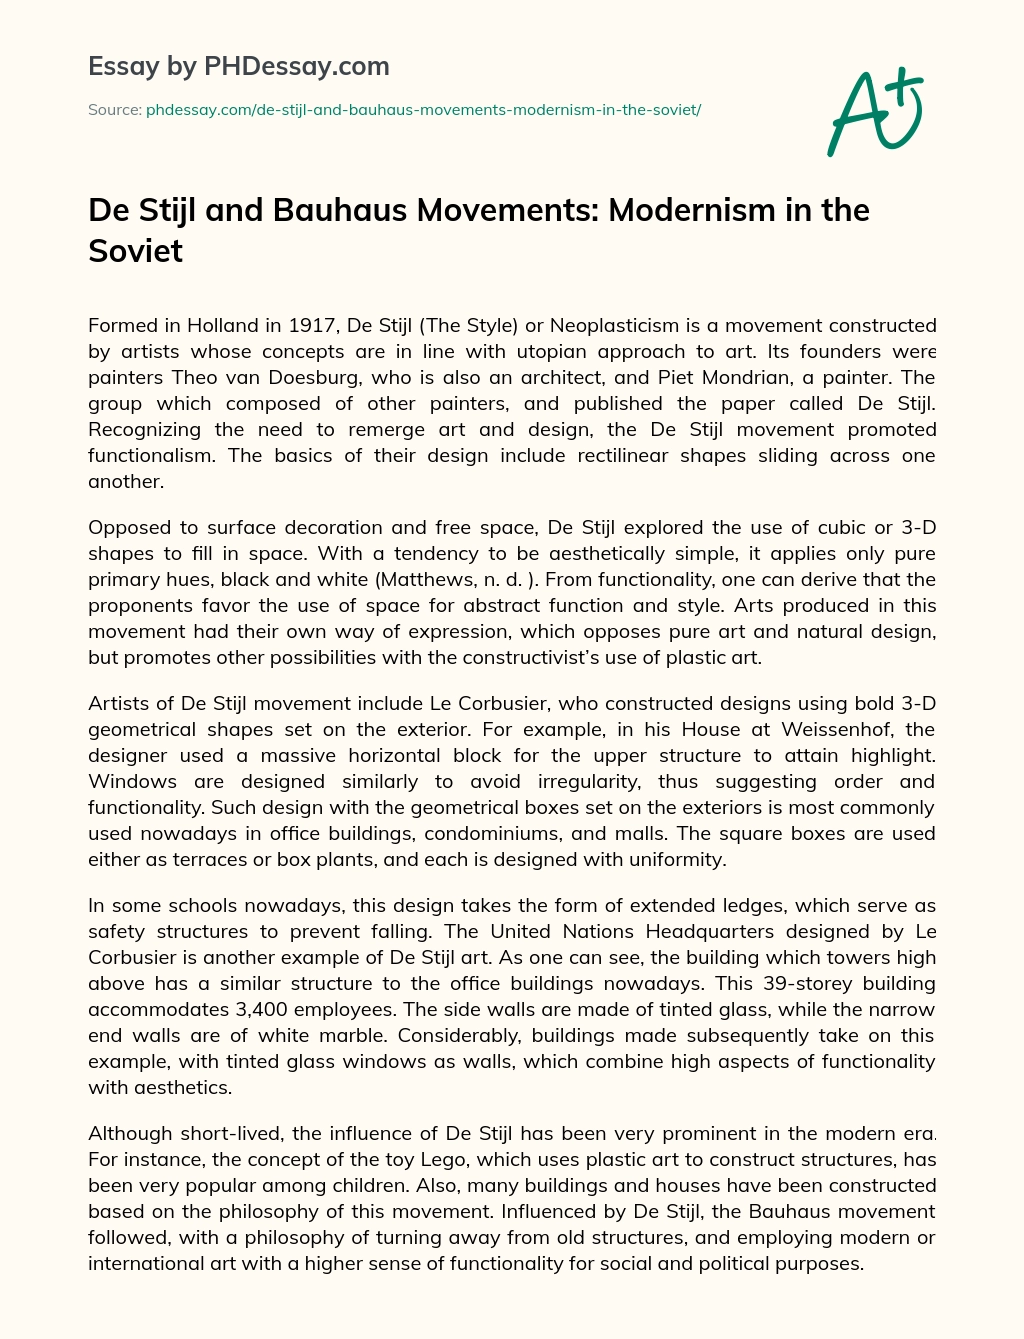 De Stijl and Bauhaus Movements: Modernism in the Soviet essay